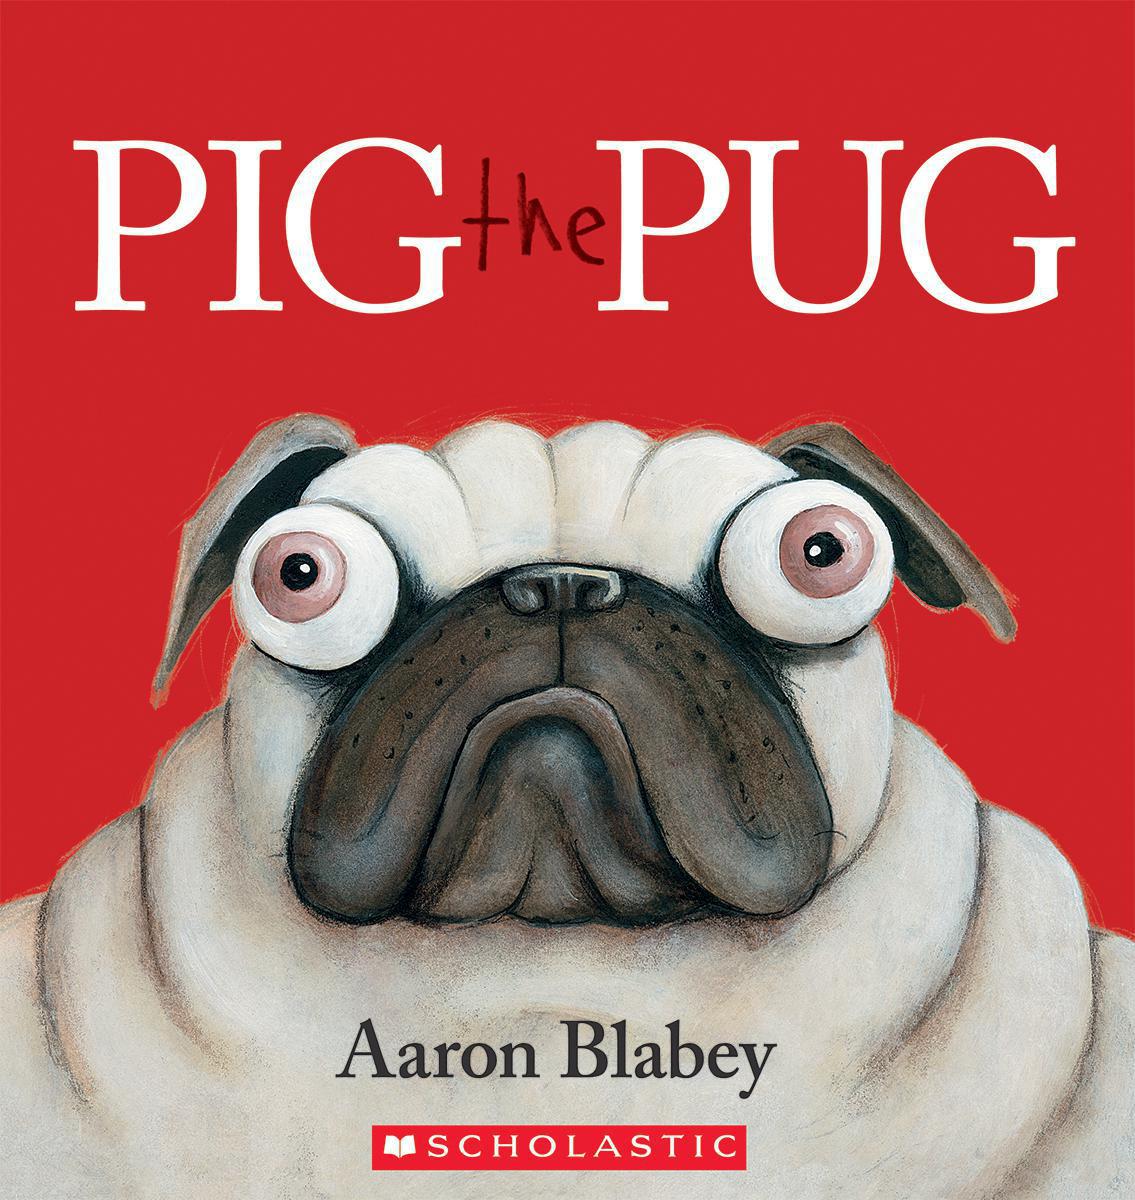  Pig the Pug 